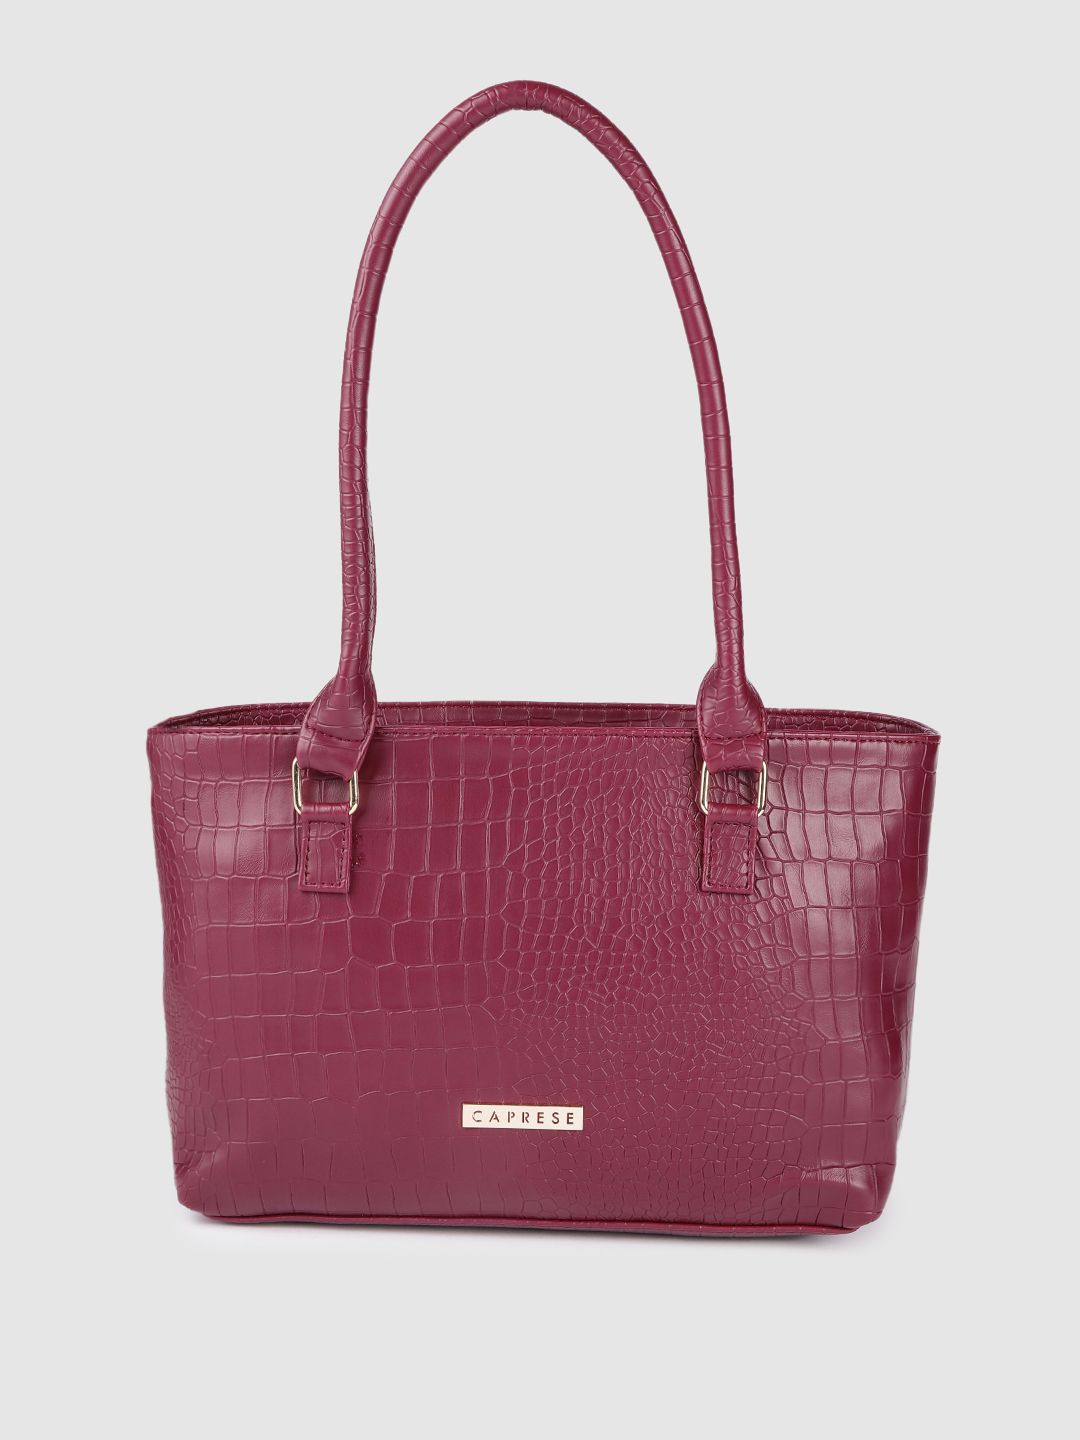 Caprese Burgundy Textured Leather Shoulder Bag Price in India